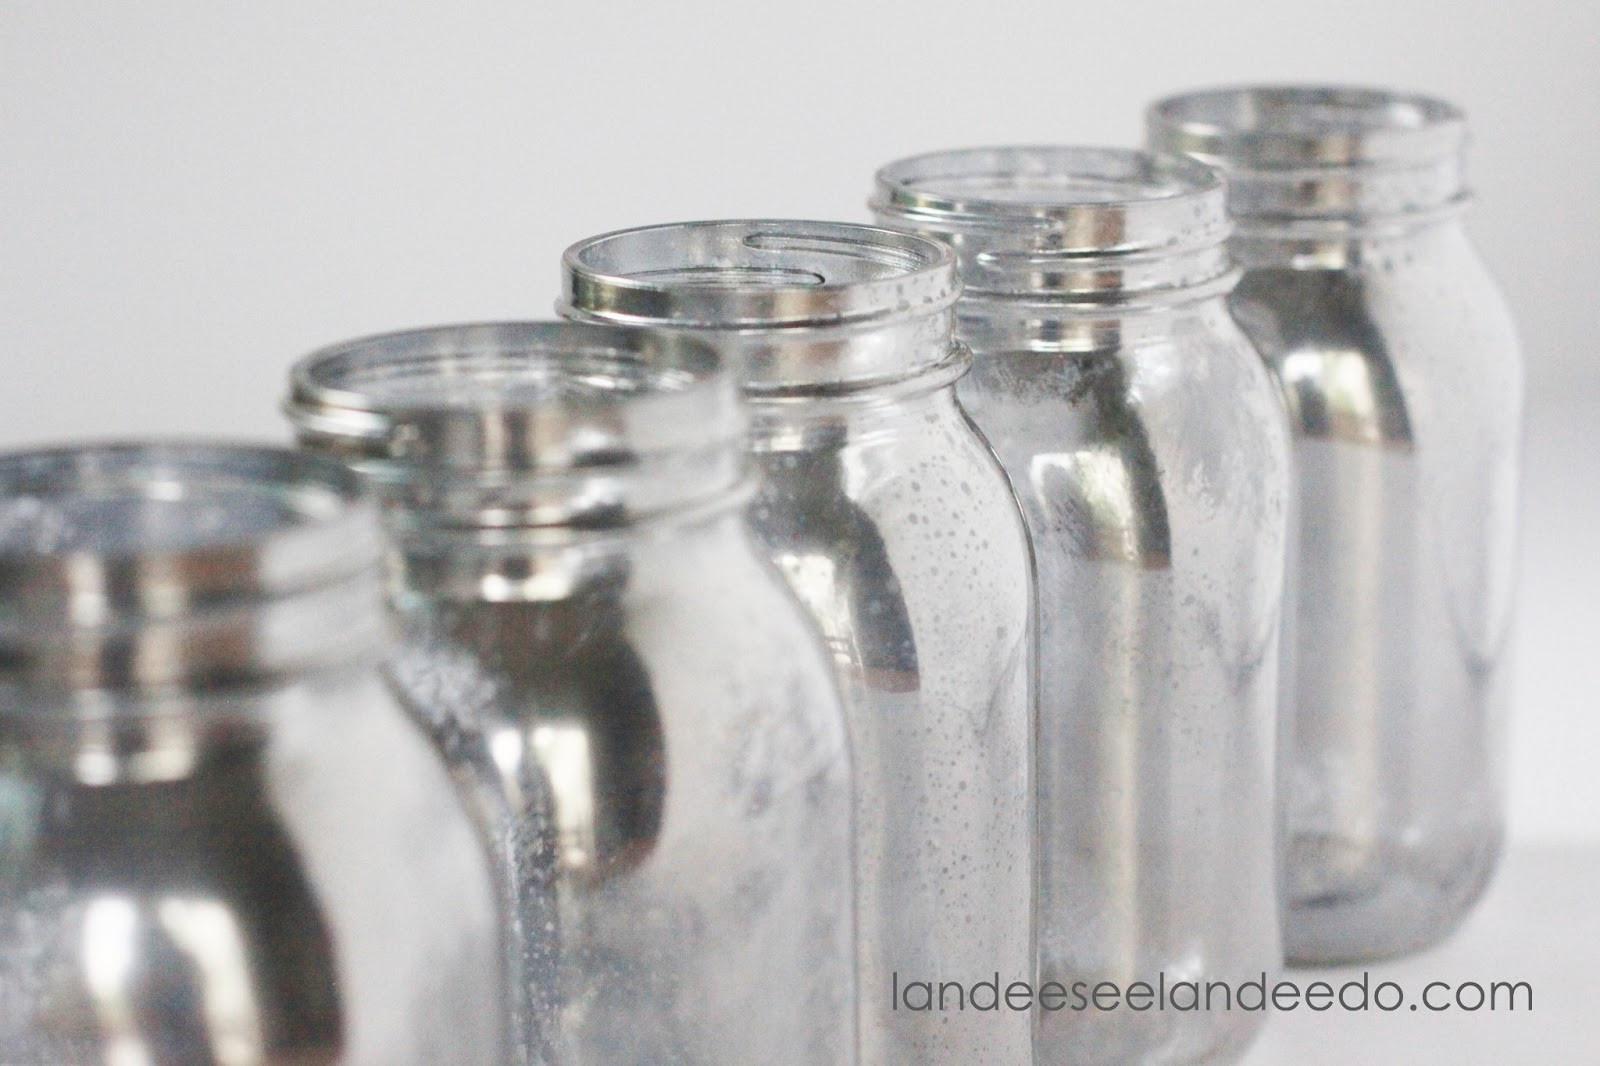 Best ideas about Mercury Glass DIY
. Save or Pin DIY Mercury Glass landeelu Now.